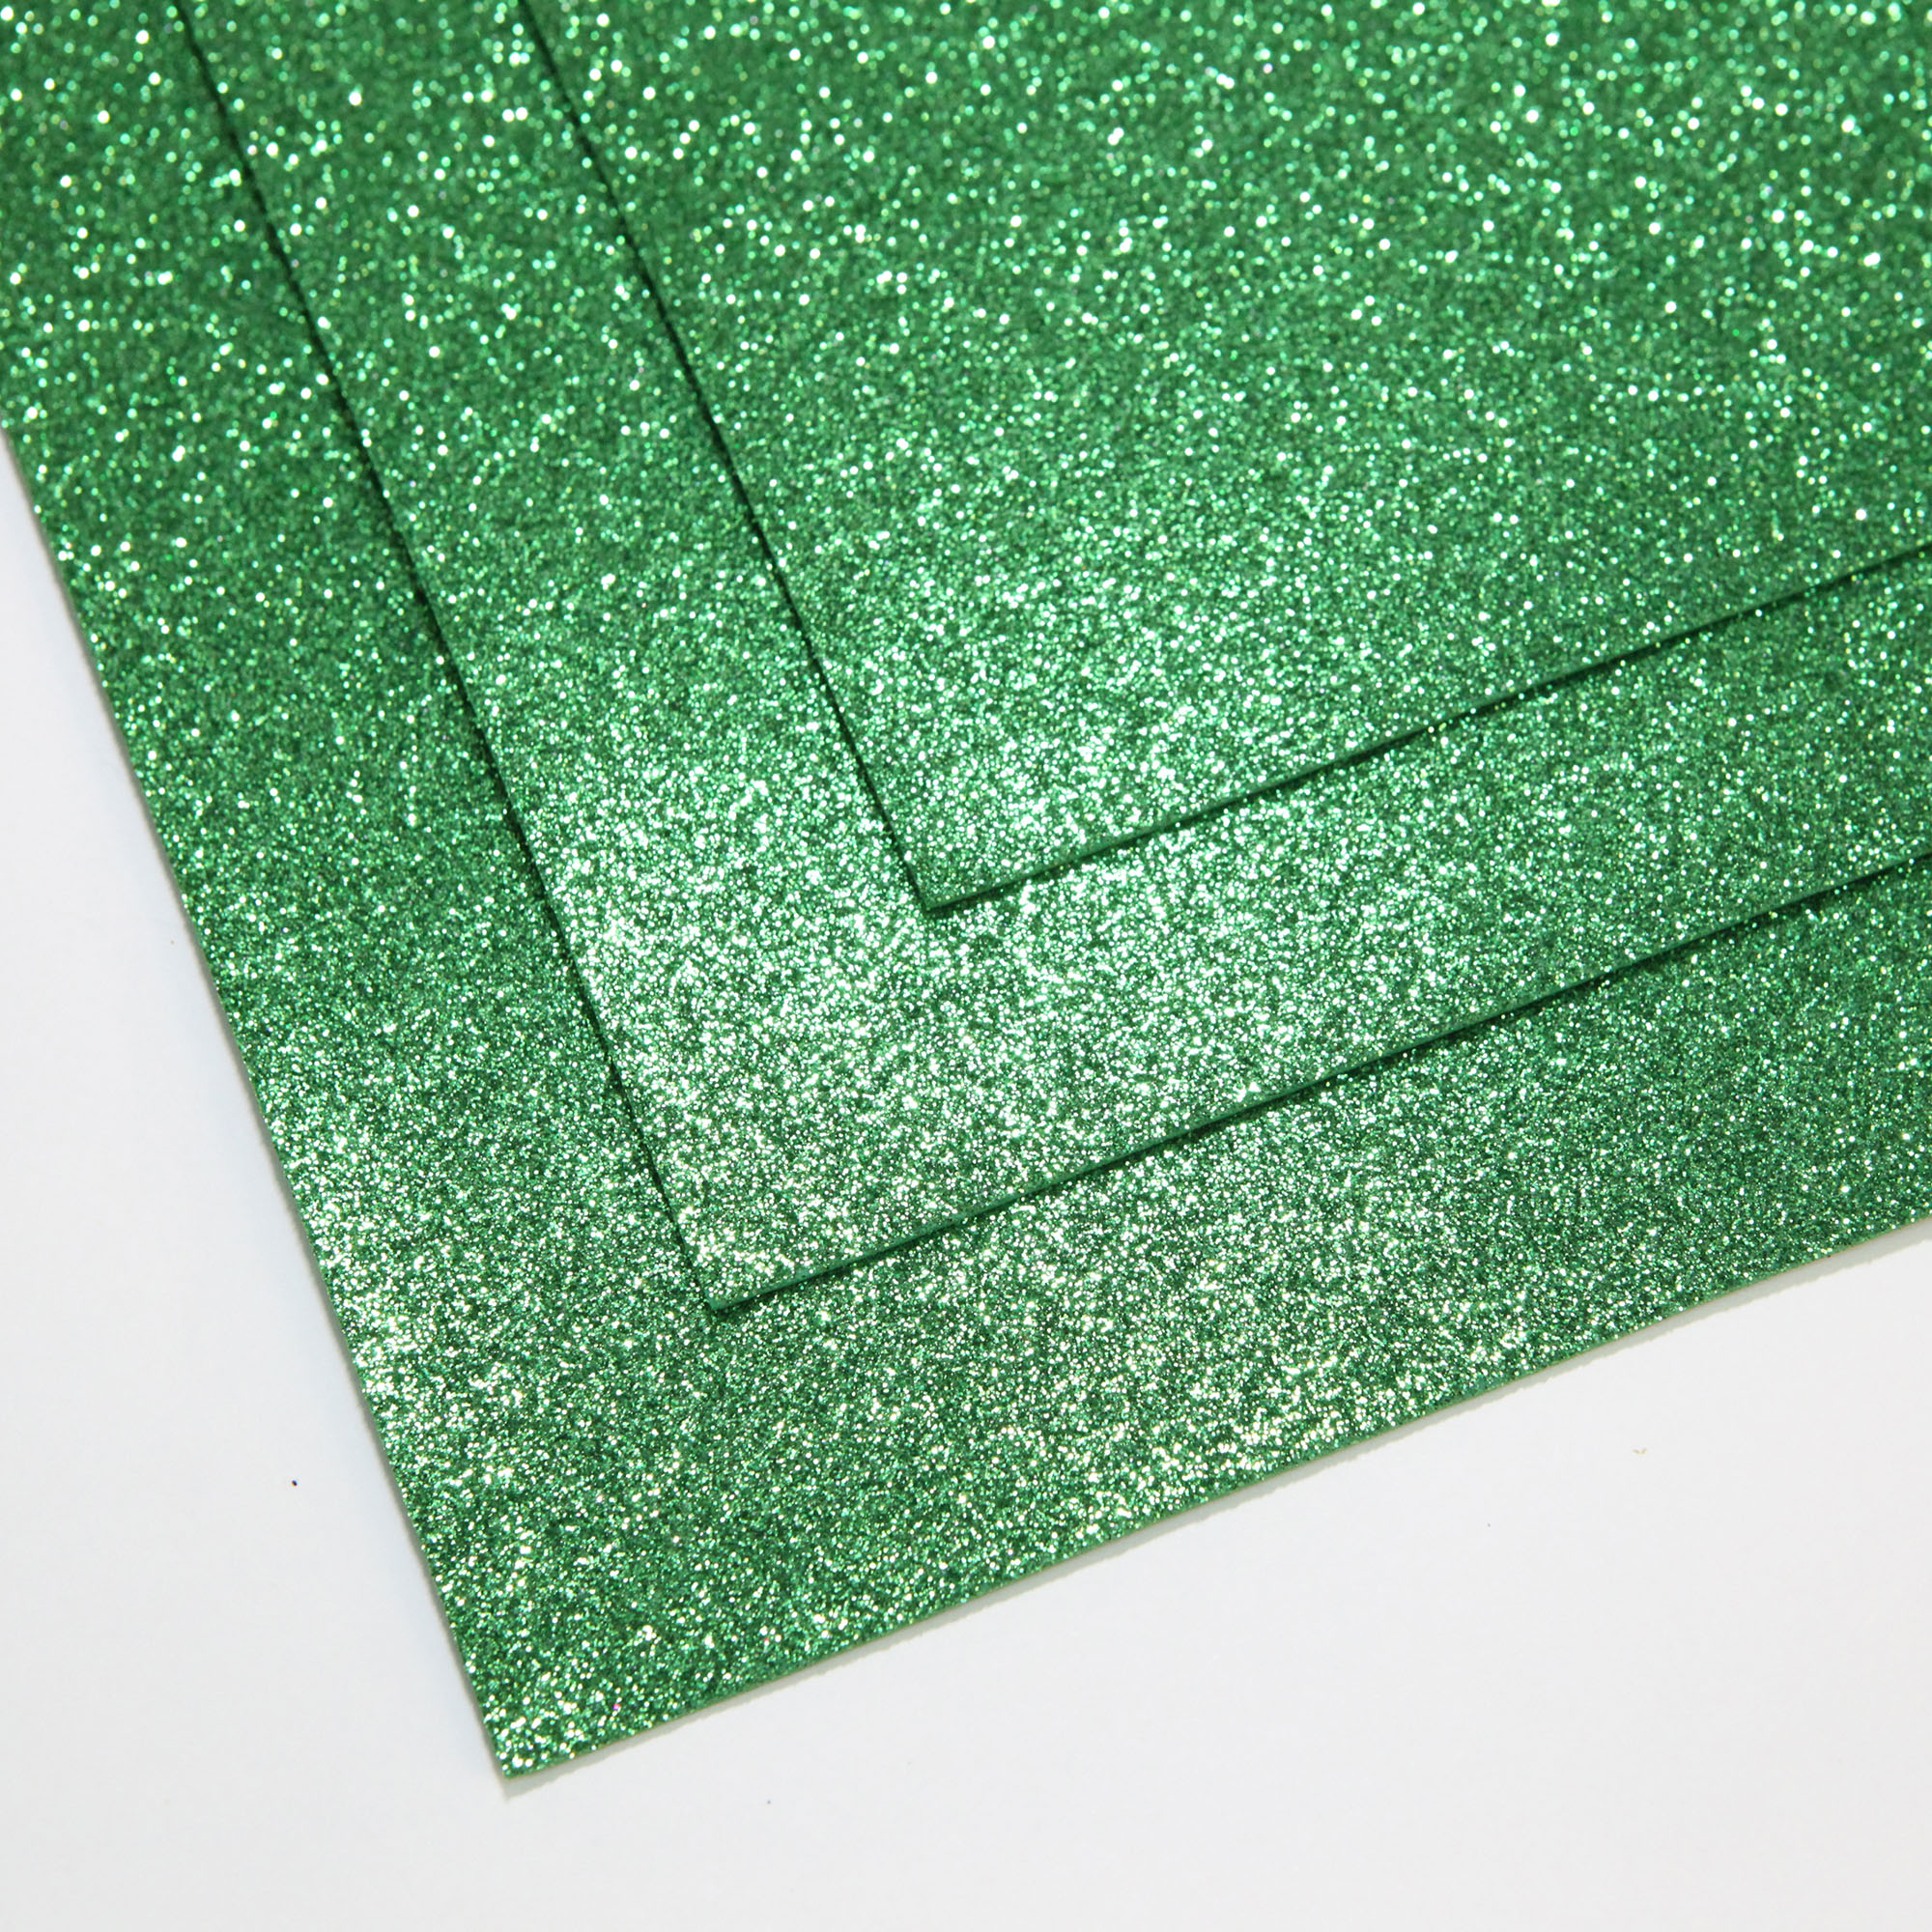 VR-FE4 40T13-S60X70-HPL16H009 Glitter Verde scuro-Темно-зеленый Фоамиран глиттер 1.5мм 60x70см. 10 л-пач. 